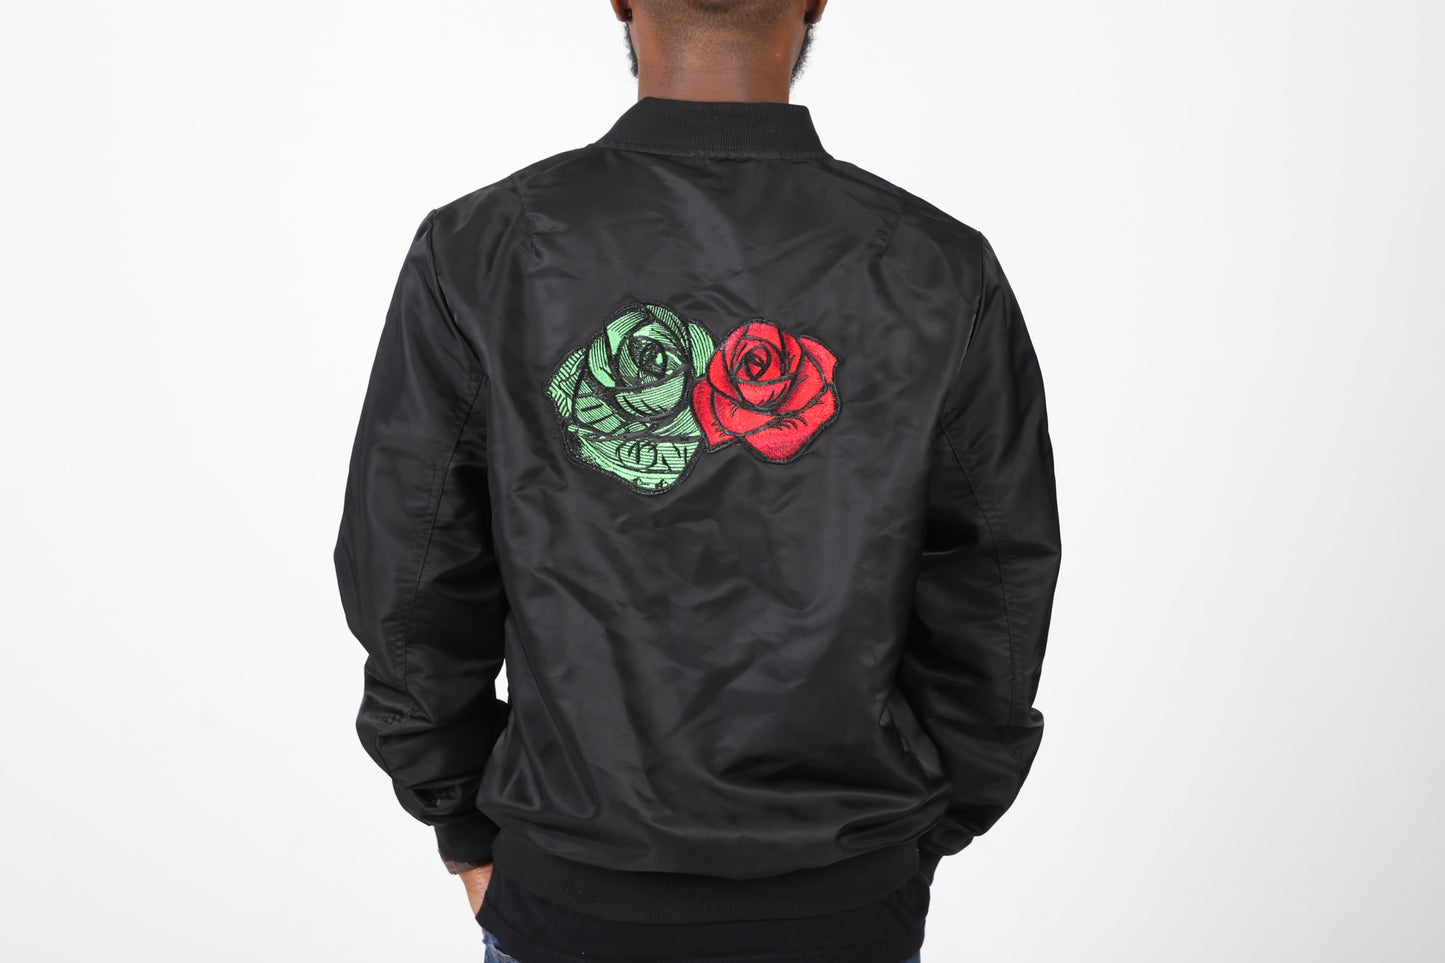 Money, Power, Flowers bomber jacket